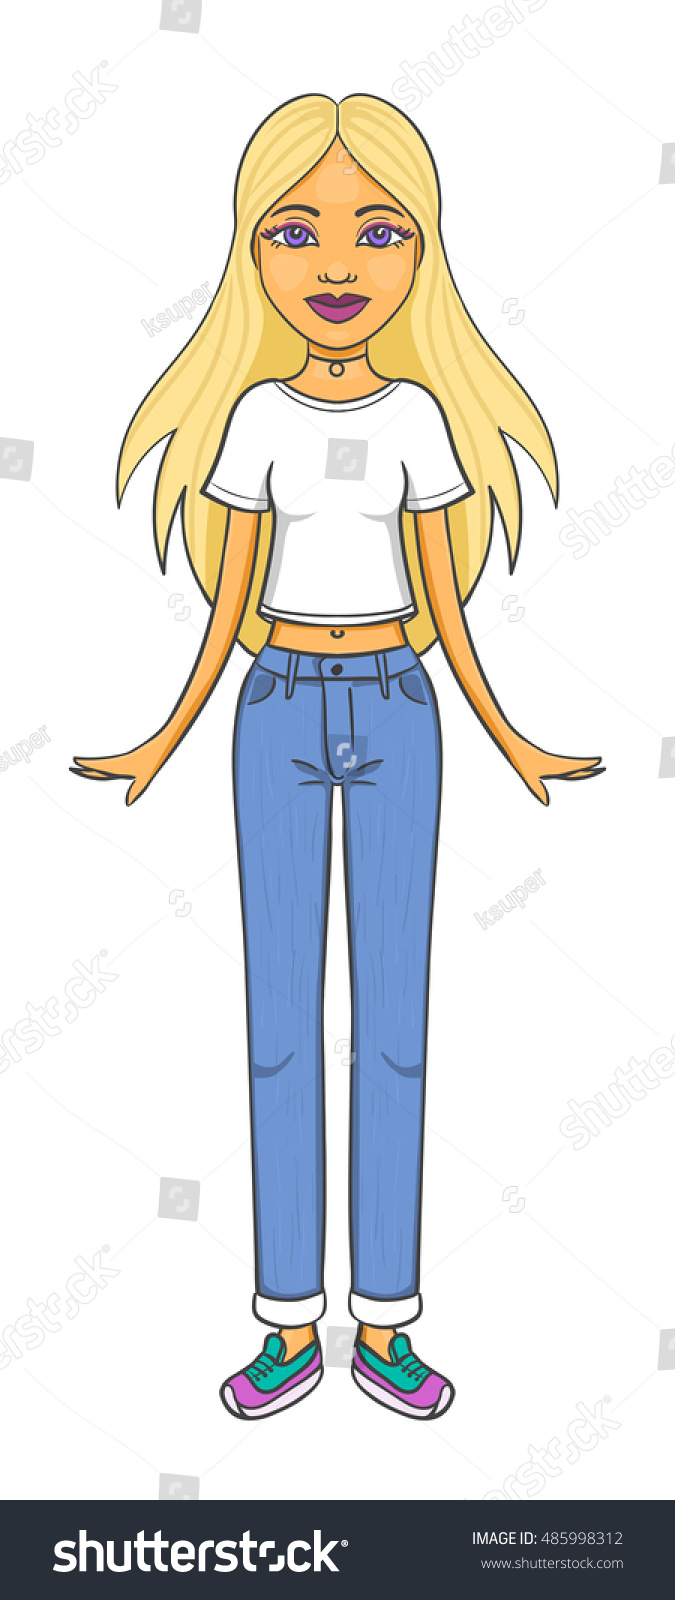 Cartoon Girl Character Long Blonde Hair Stock Vektorgrafik Lizenzfrei 485998312